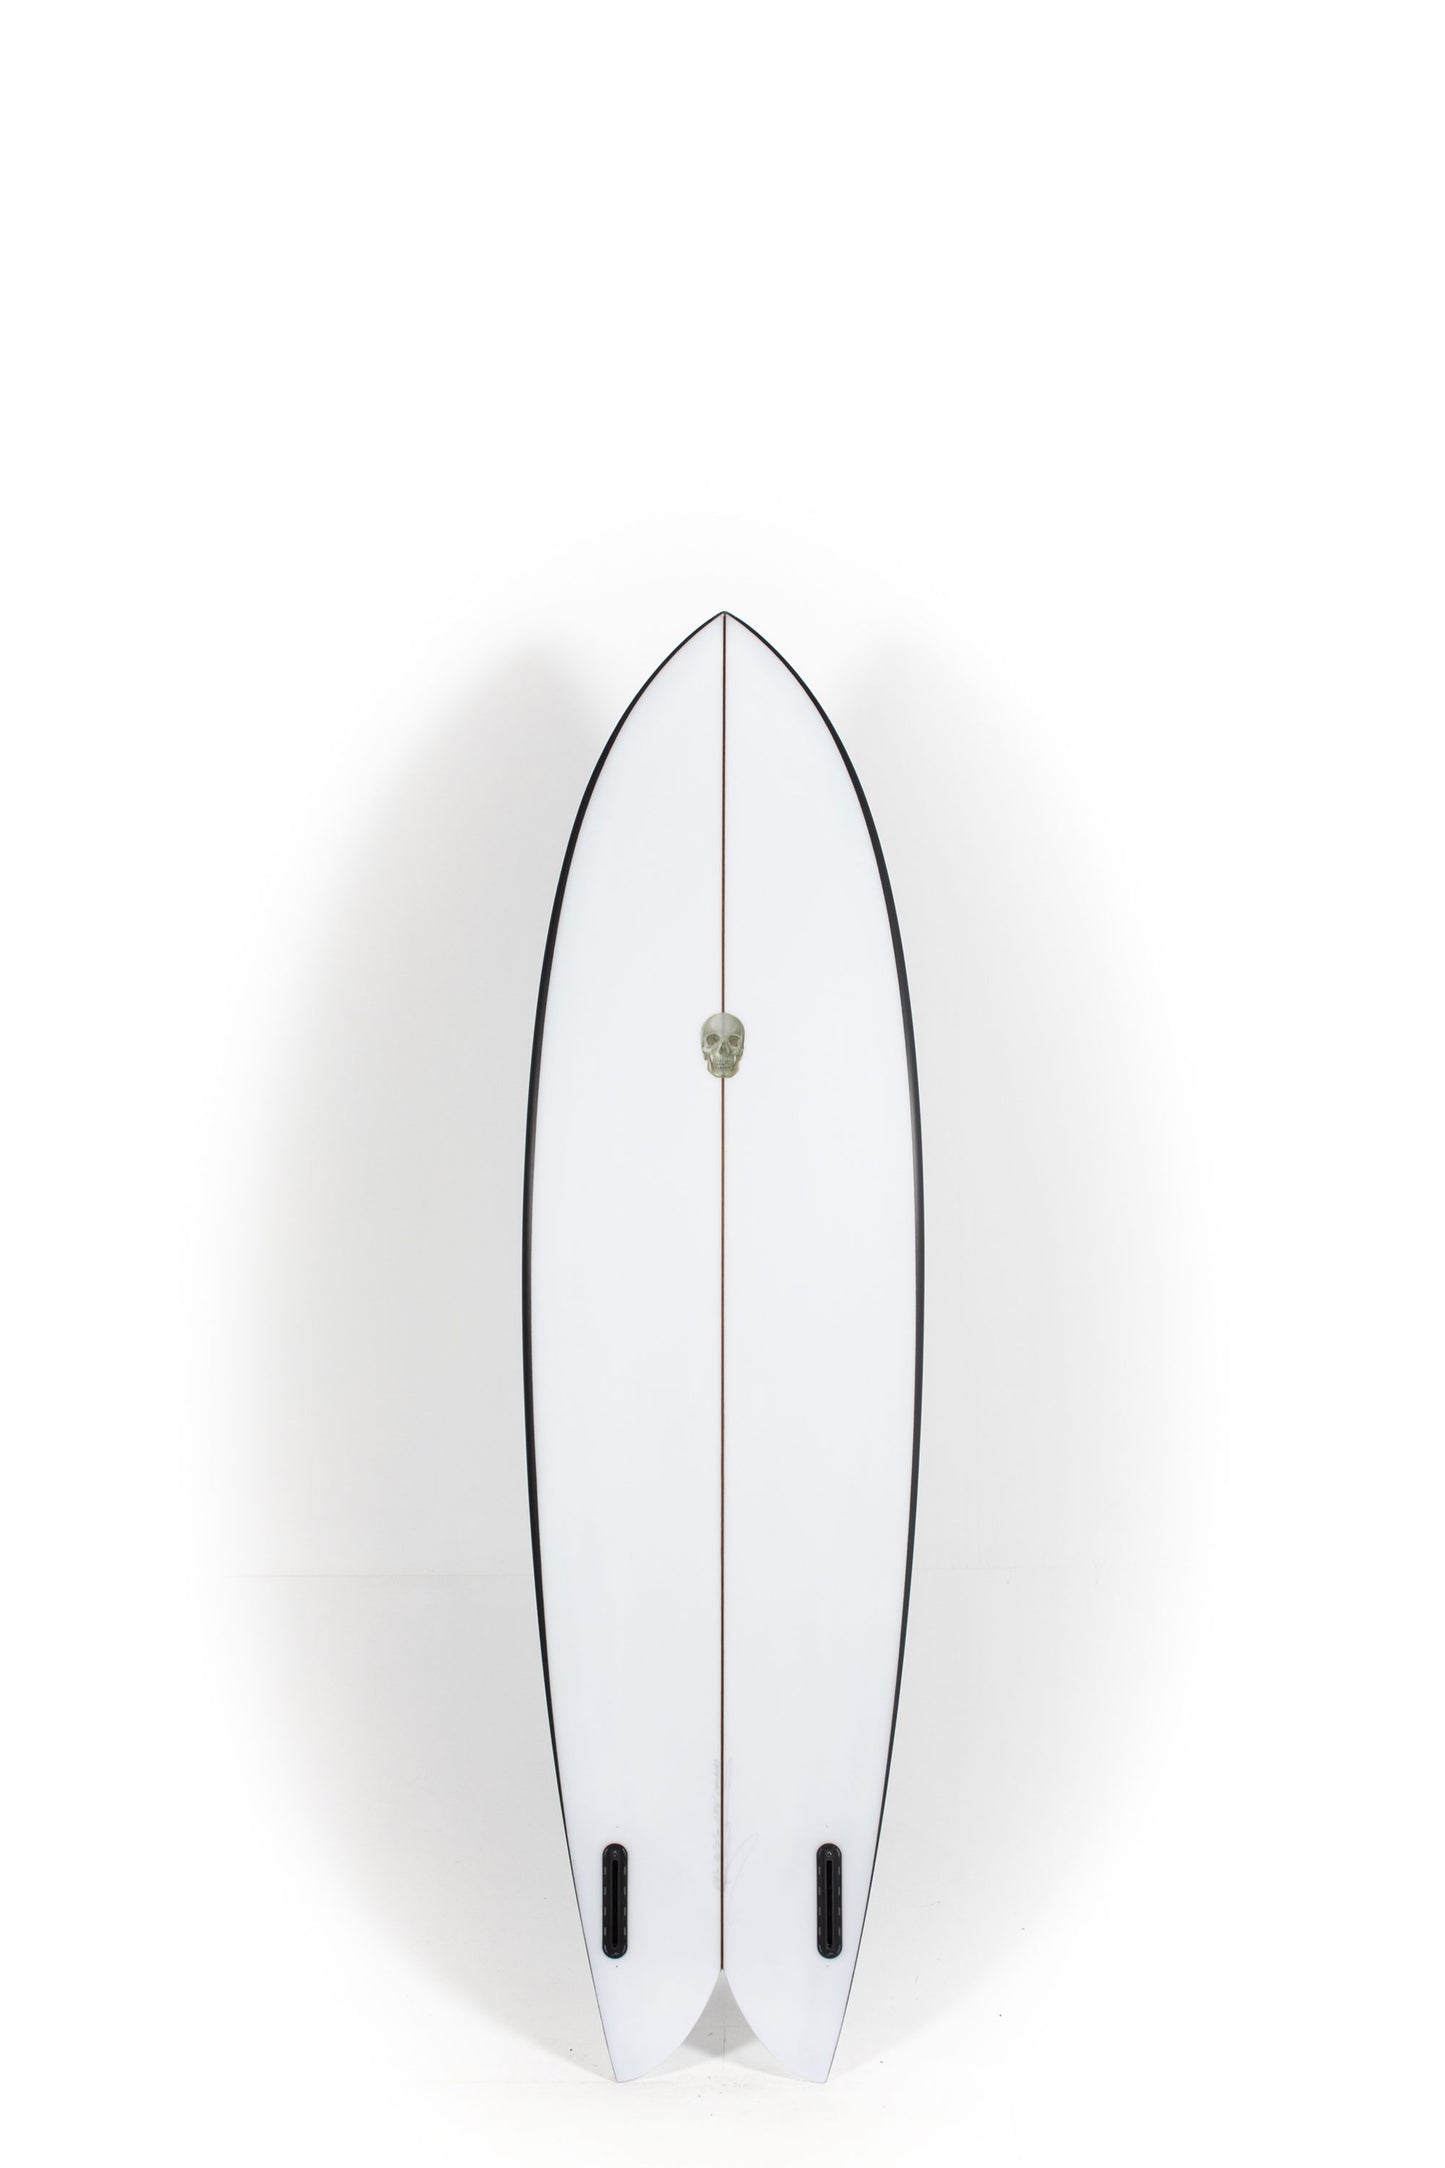 Pukas Surf shop - Christenson Surfboards - LONG PHISH - 6'4" x 20 1/2 x 2 7/16 - CX04044